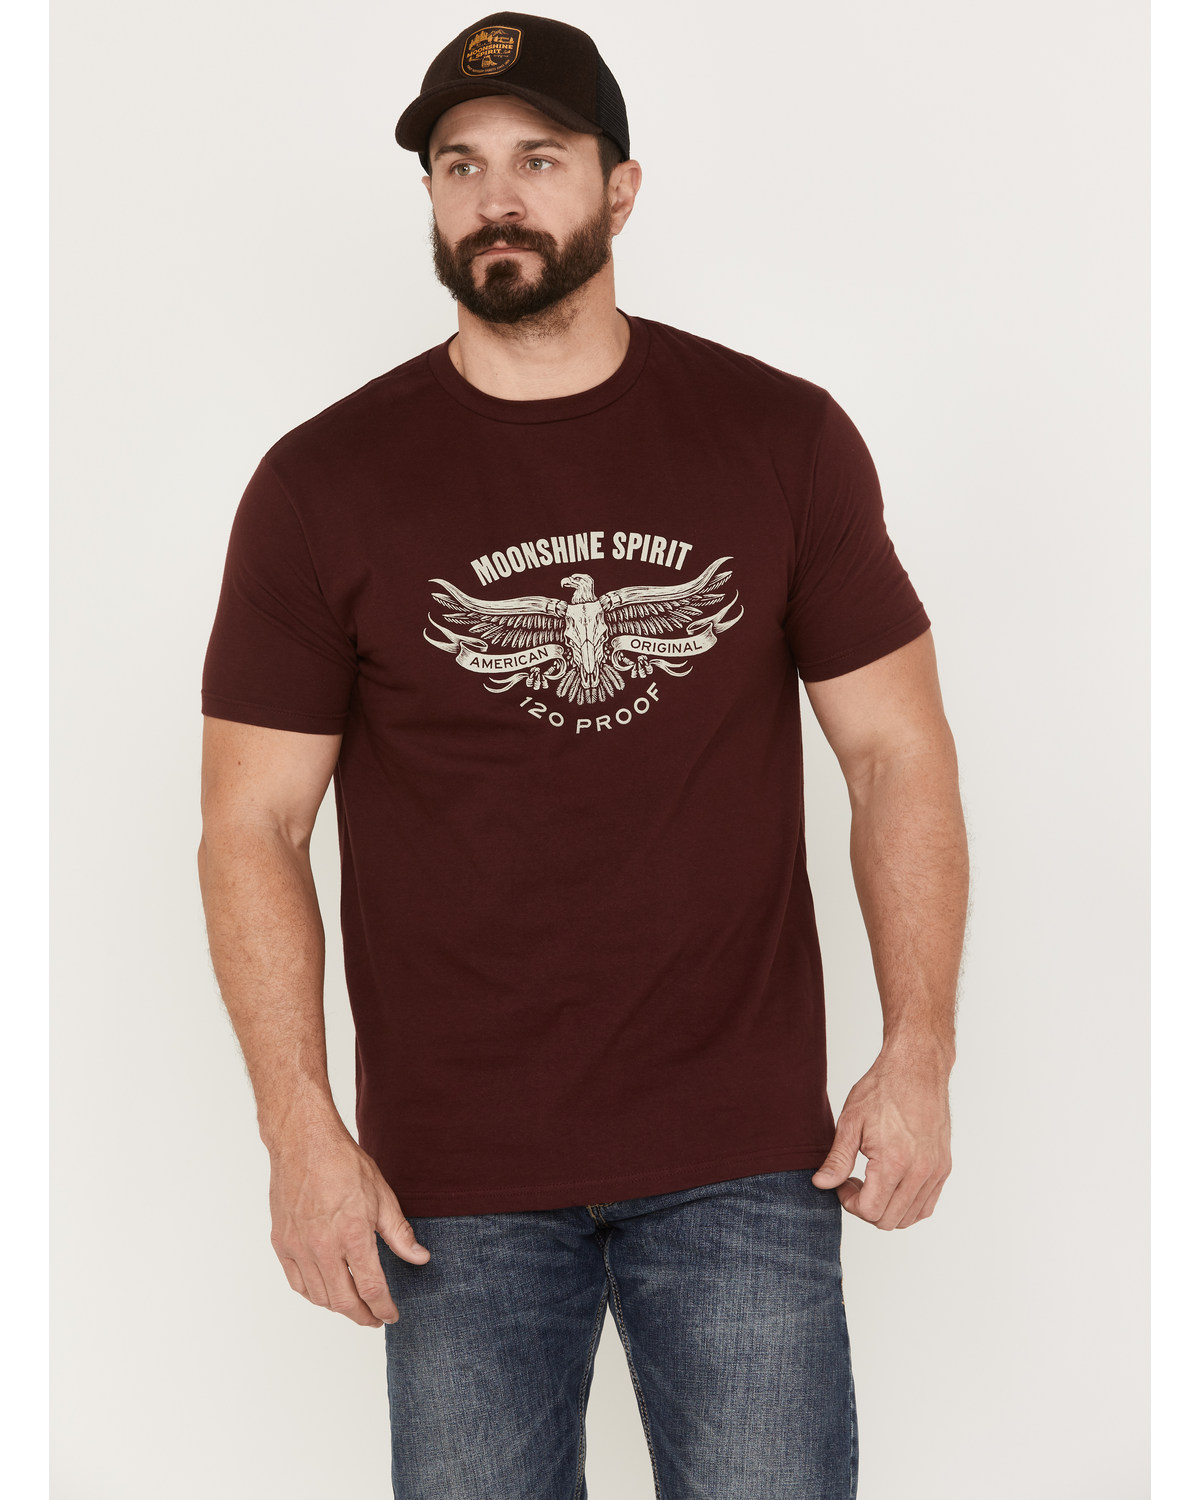 Moonshine Spirit Men's American Longhorn Graphic Short Sleeve T-Shirt